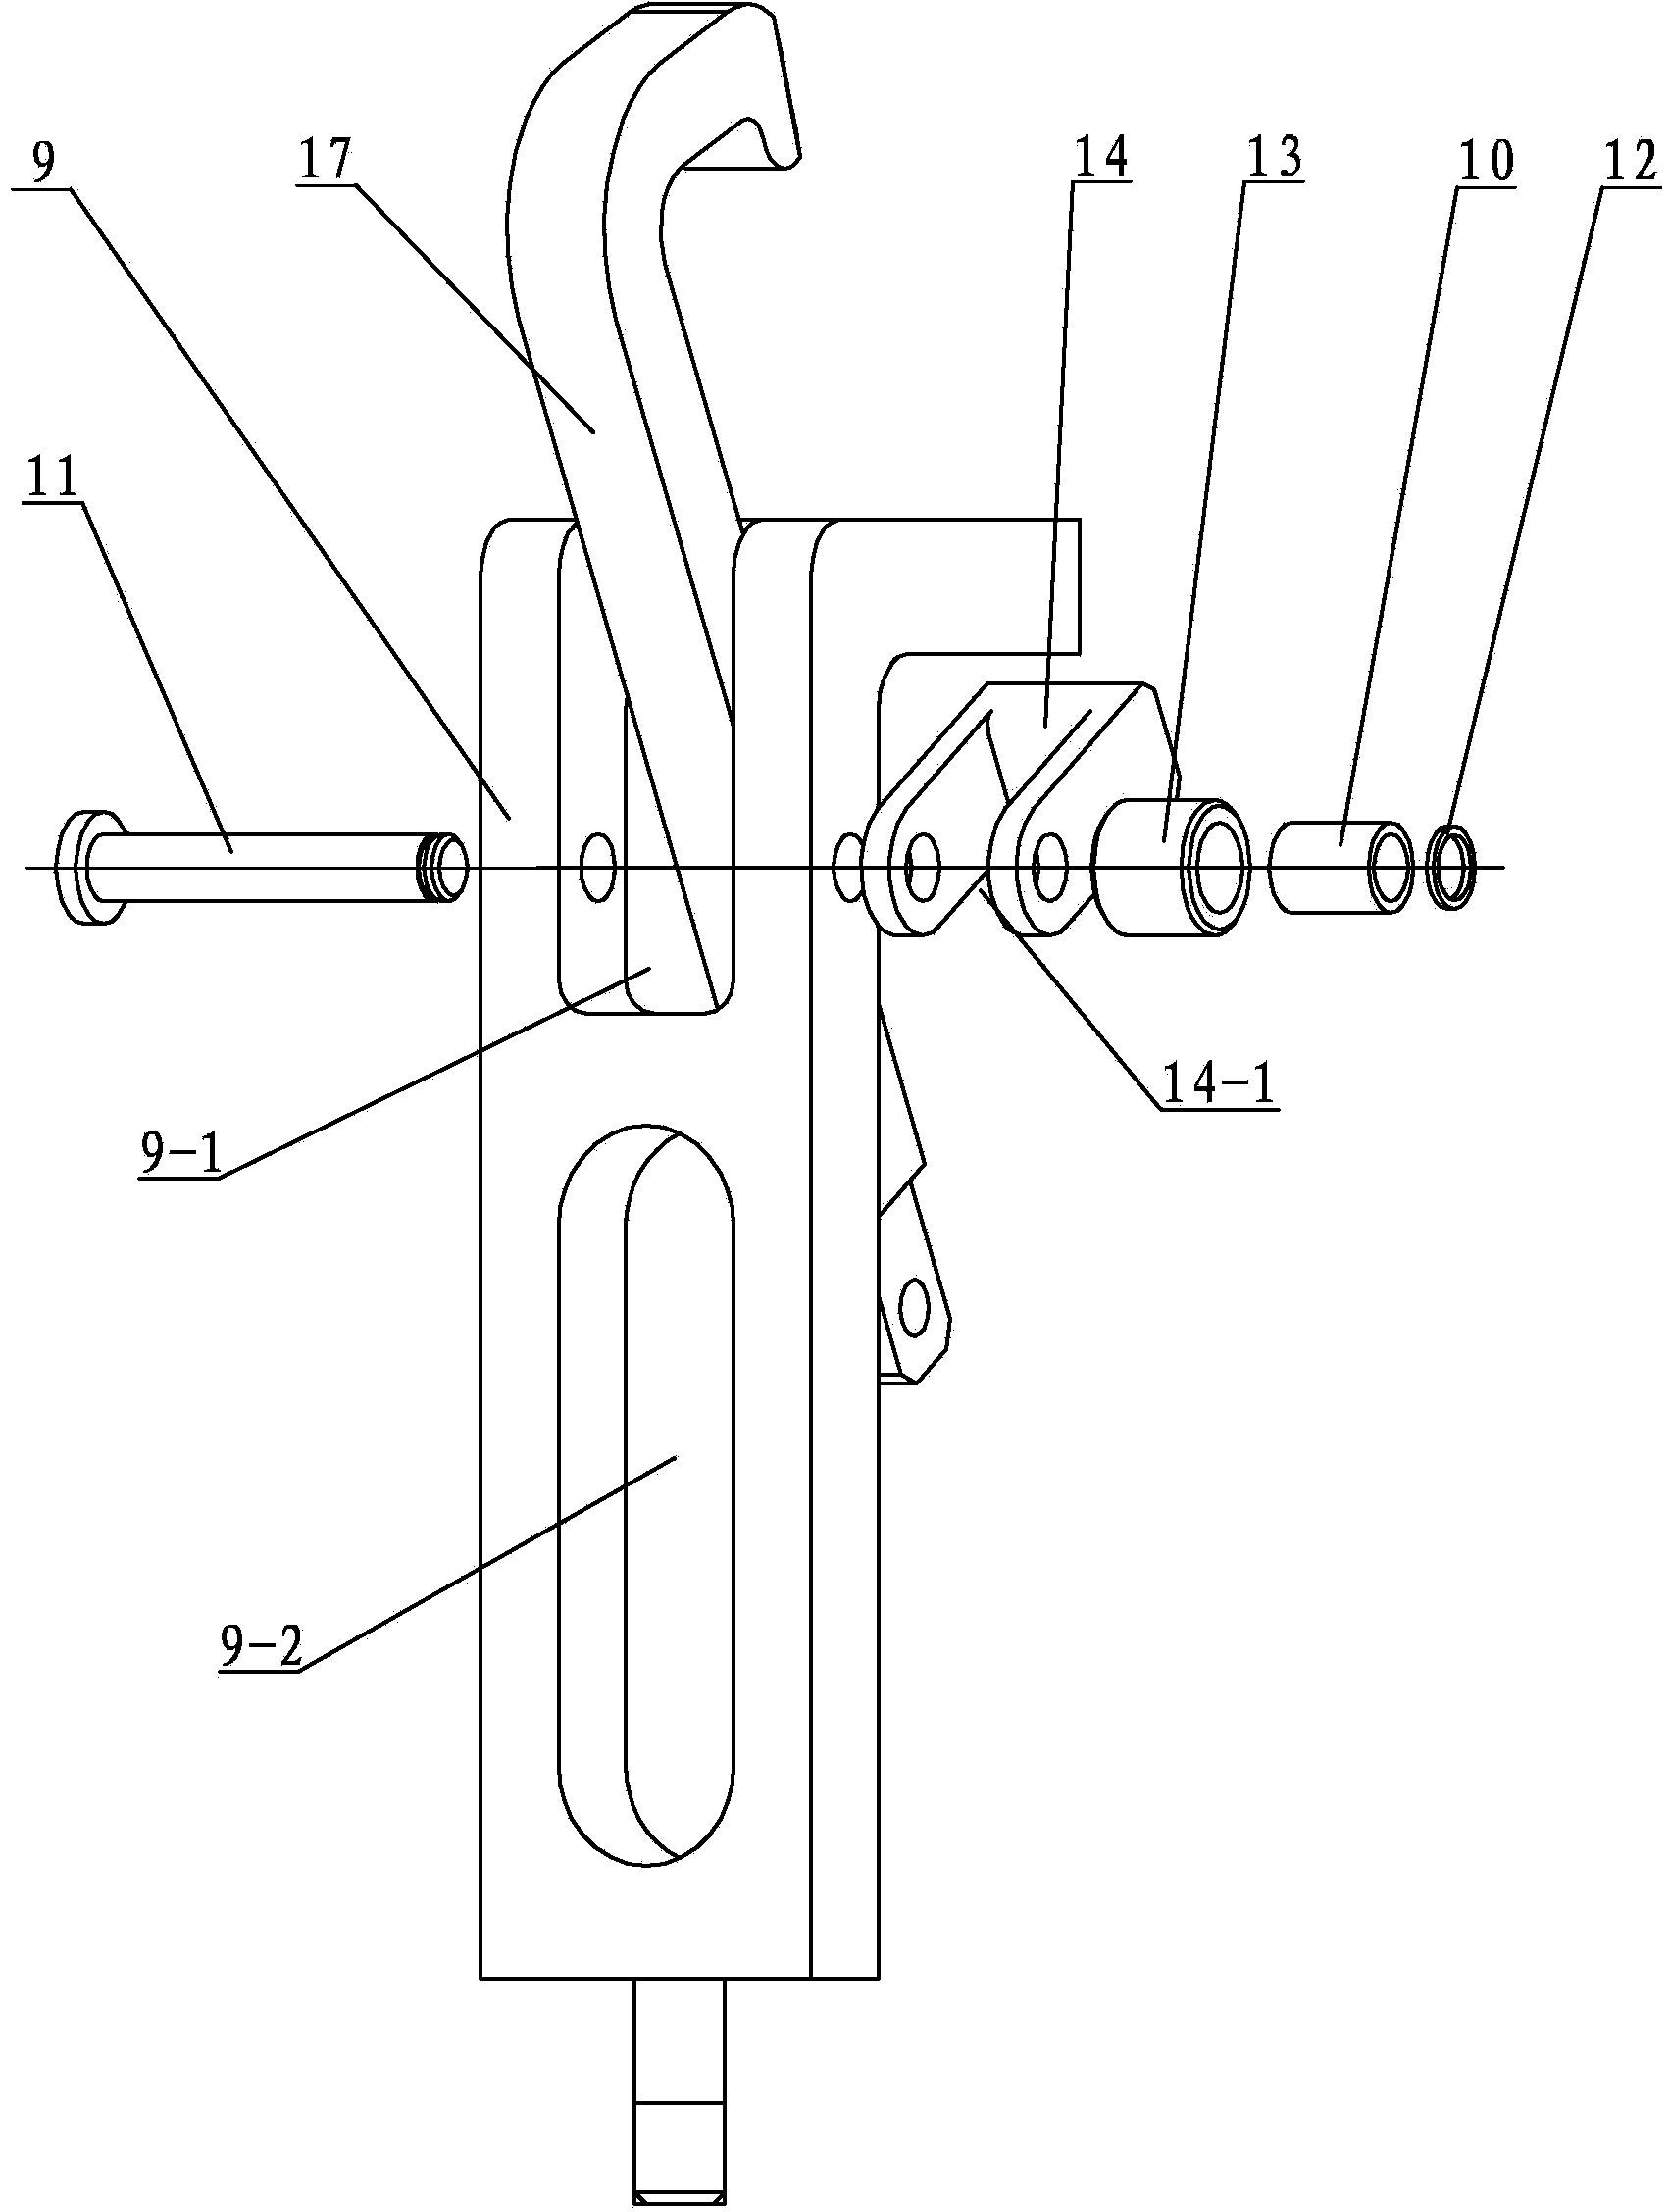 Small-size spacecraft butt-joint mechanism